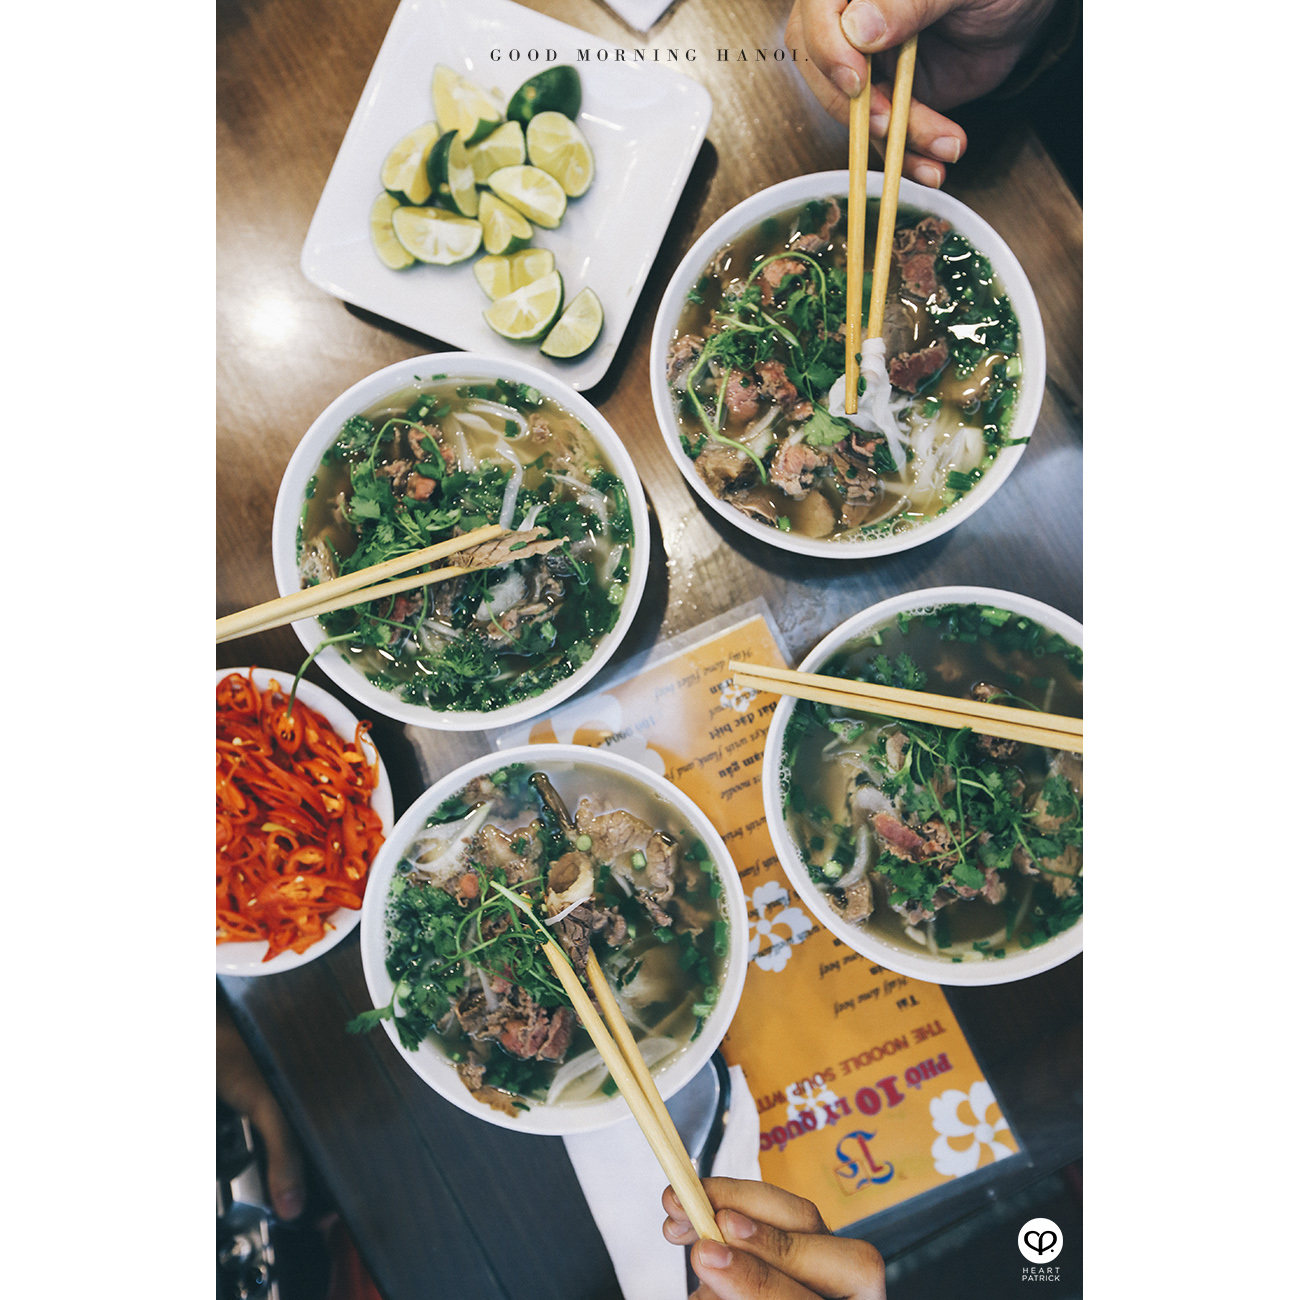 heartpatrick travel hanoi vietnam street photography pho 10 beef noodle